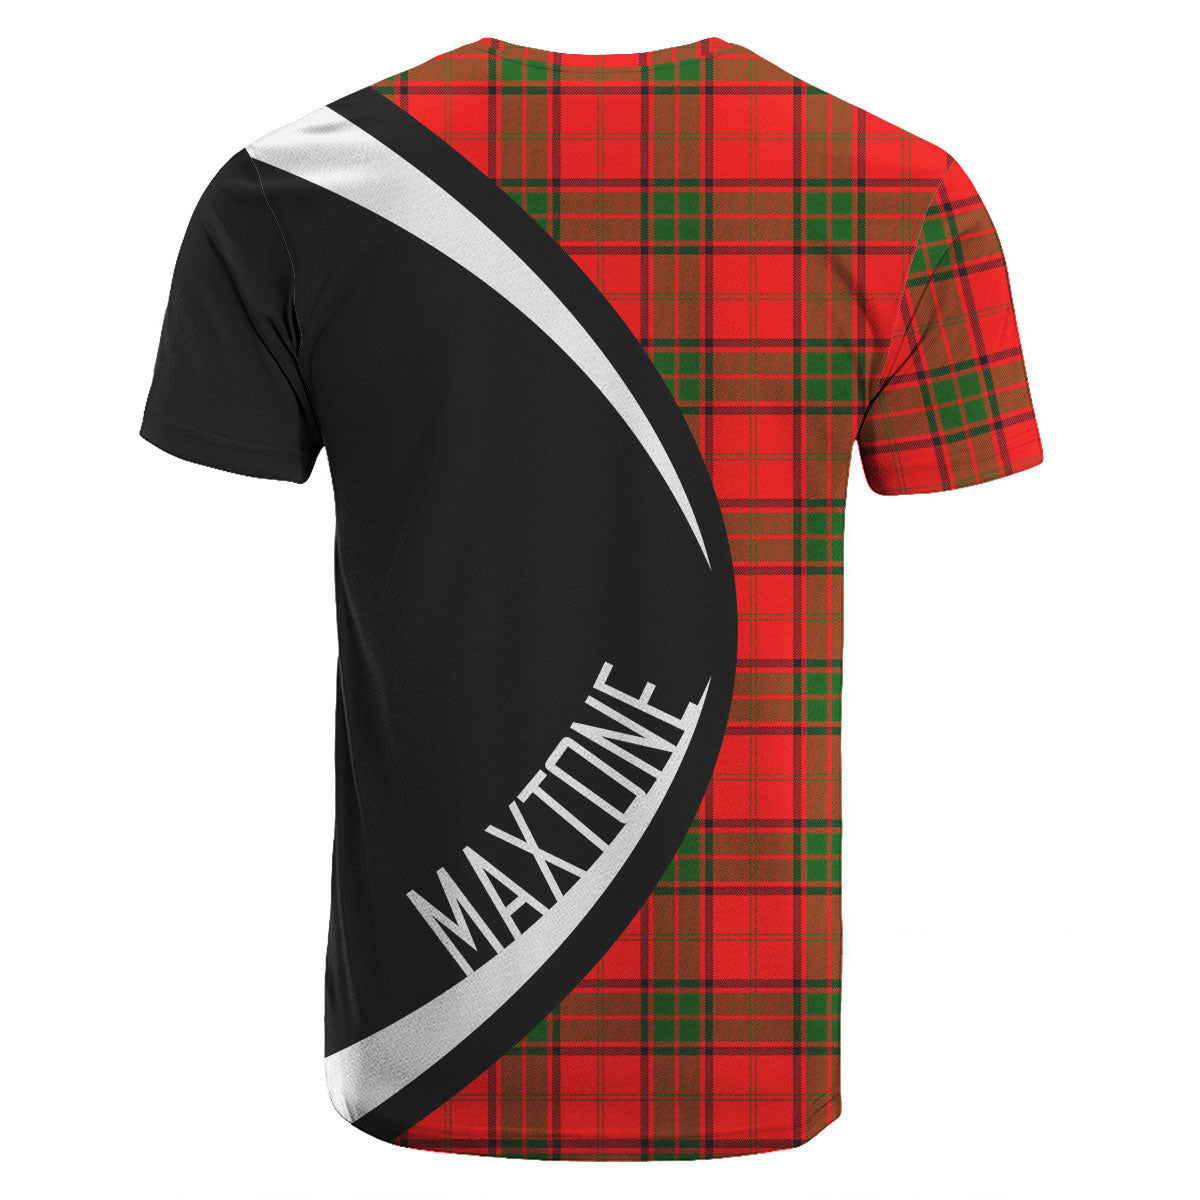 Maxtone Tartan Crest T-shirt - Circle Style